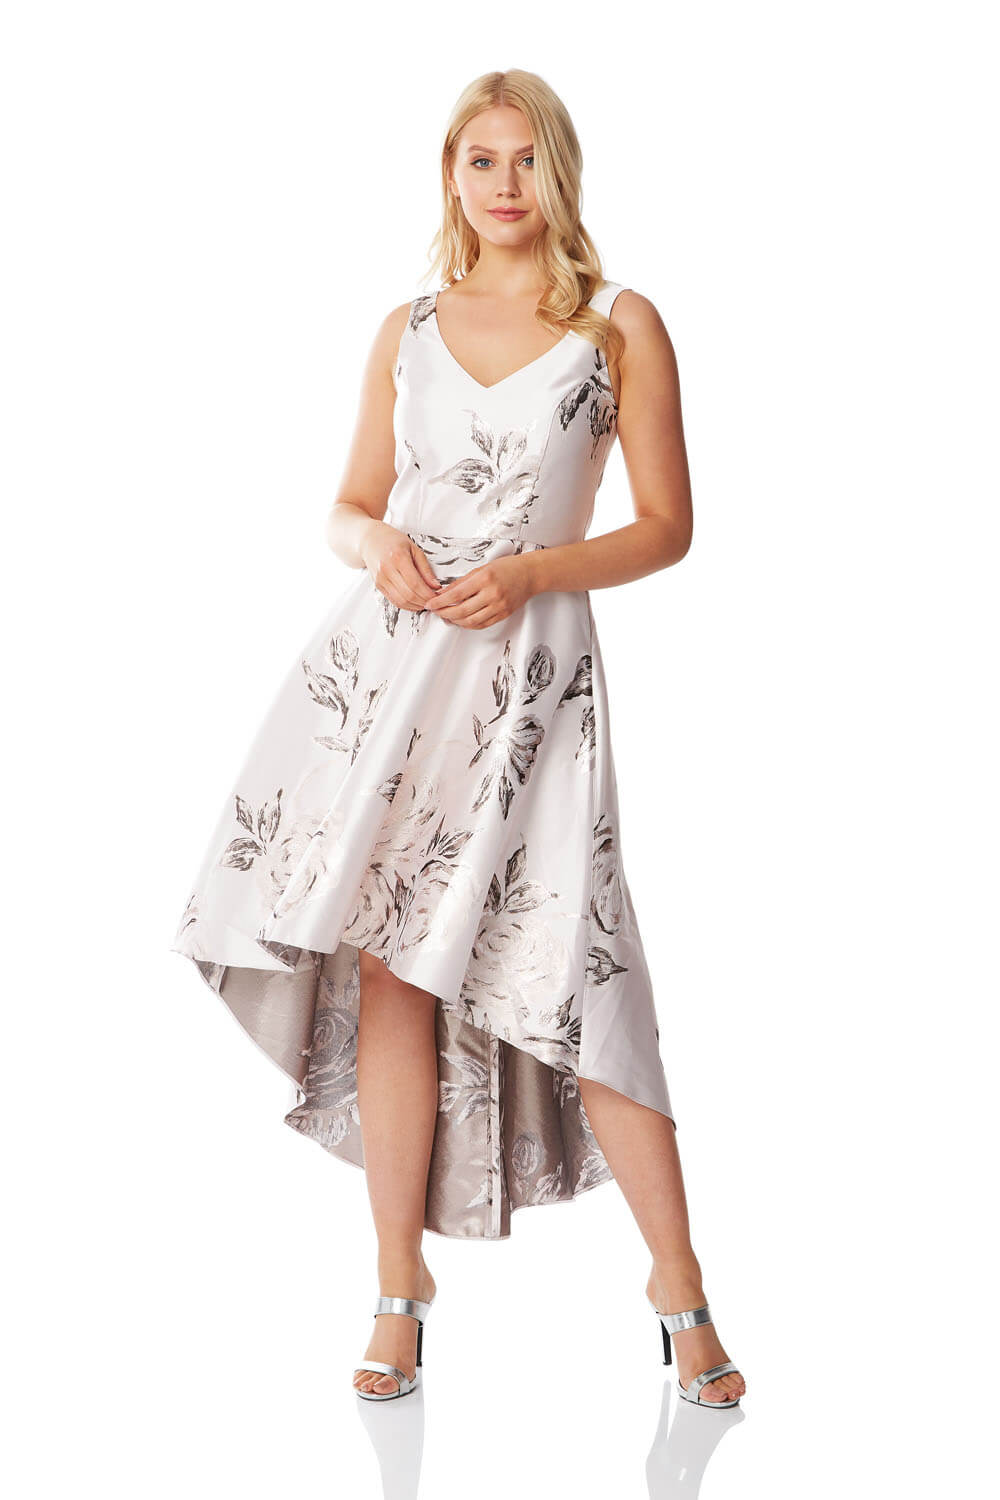 Roman Originals Jacquard Rose Gown Dress